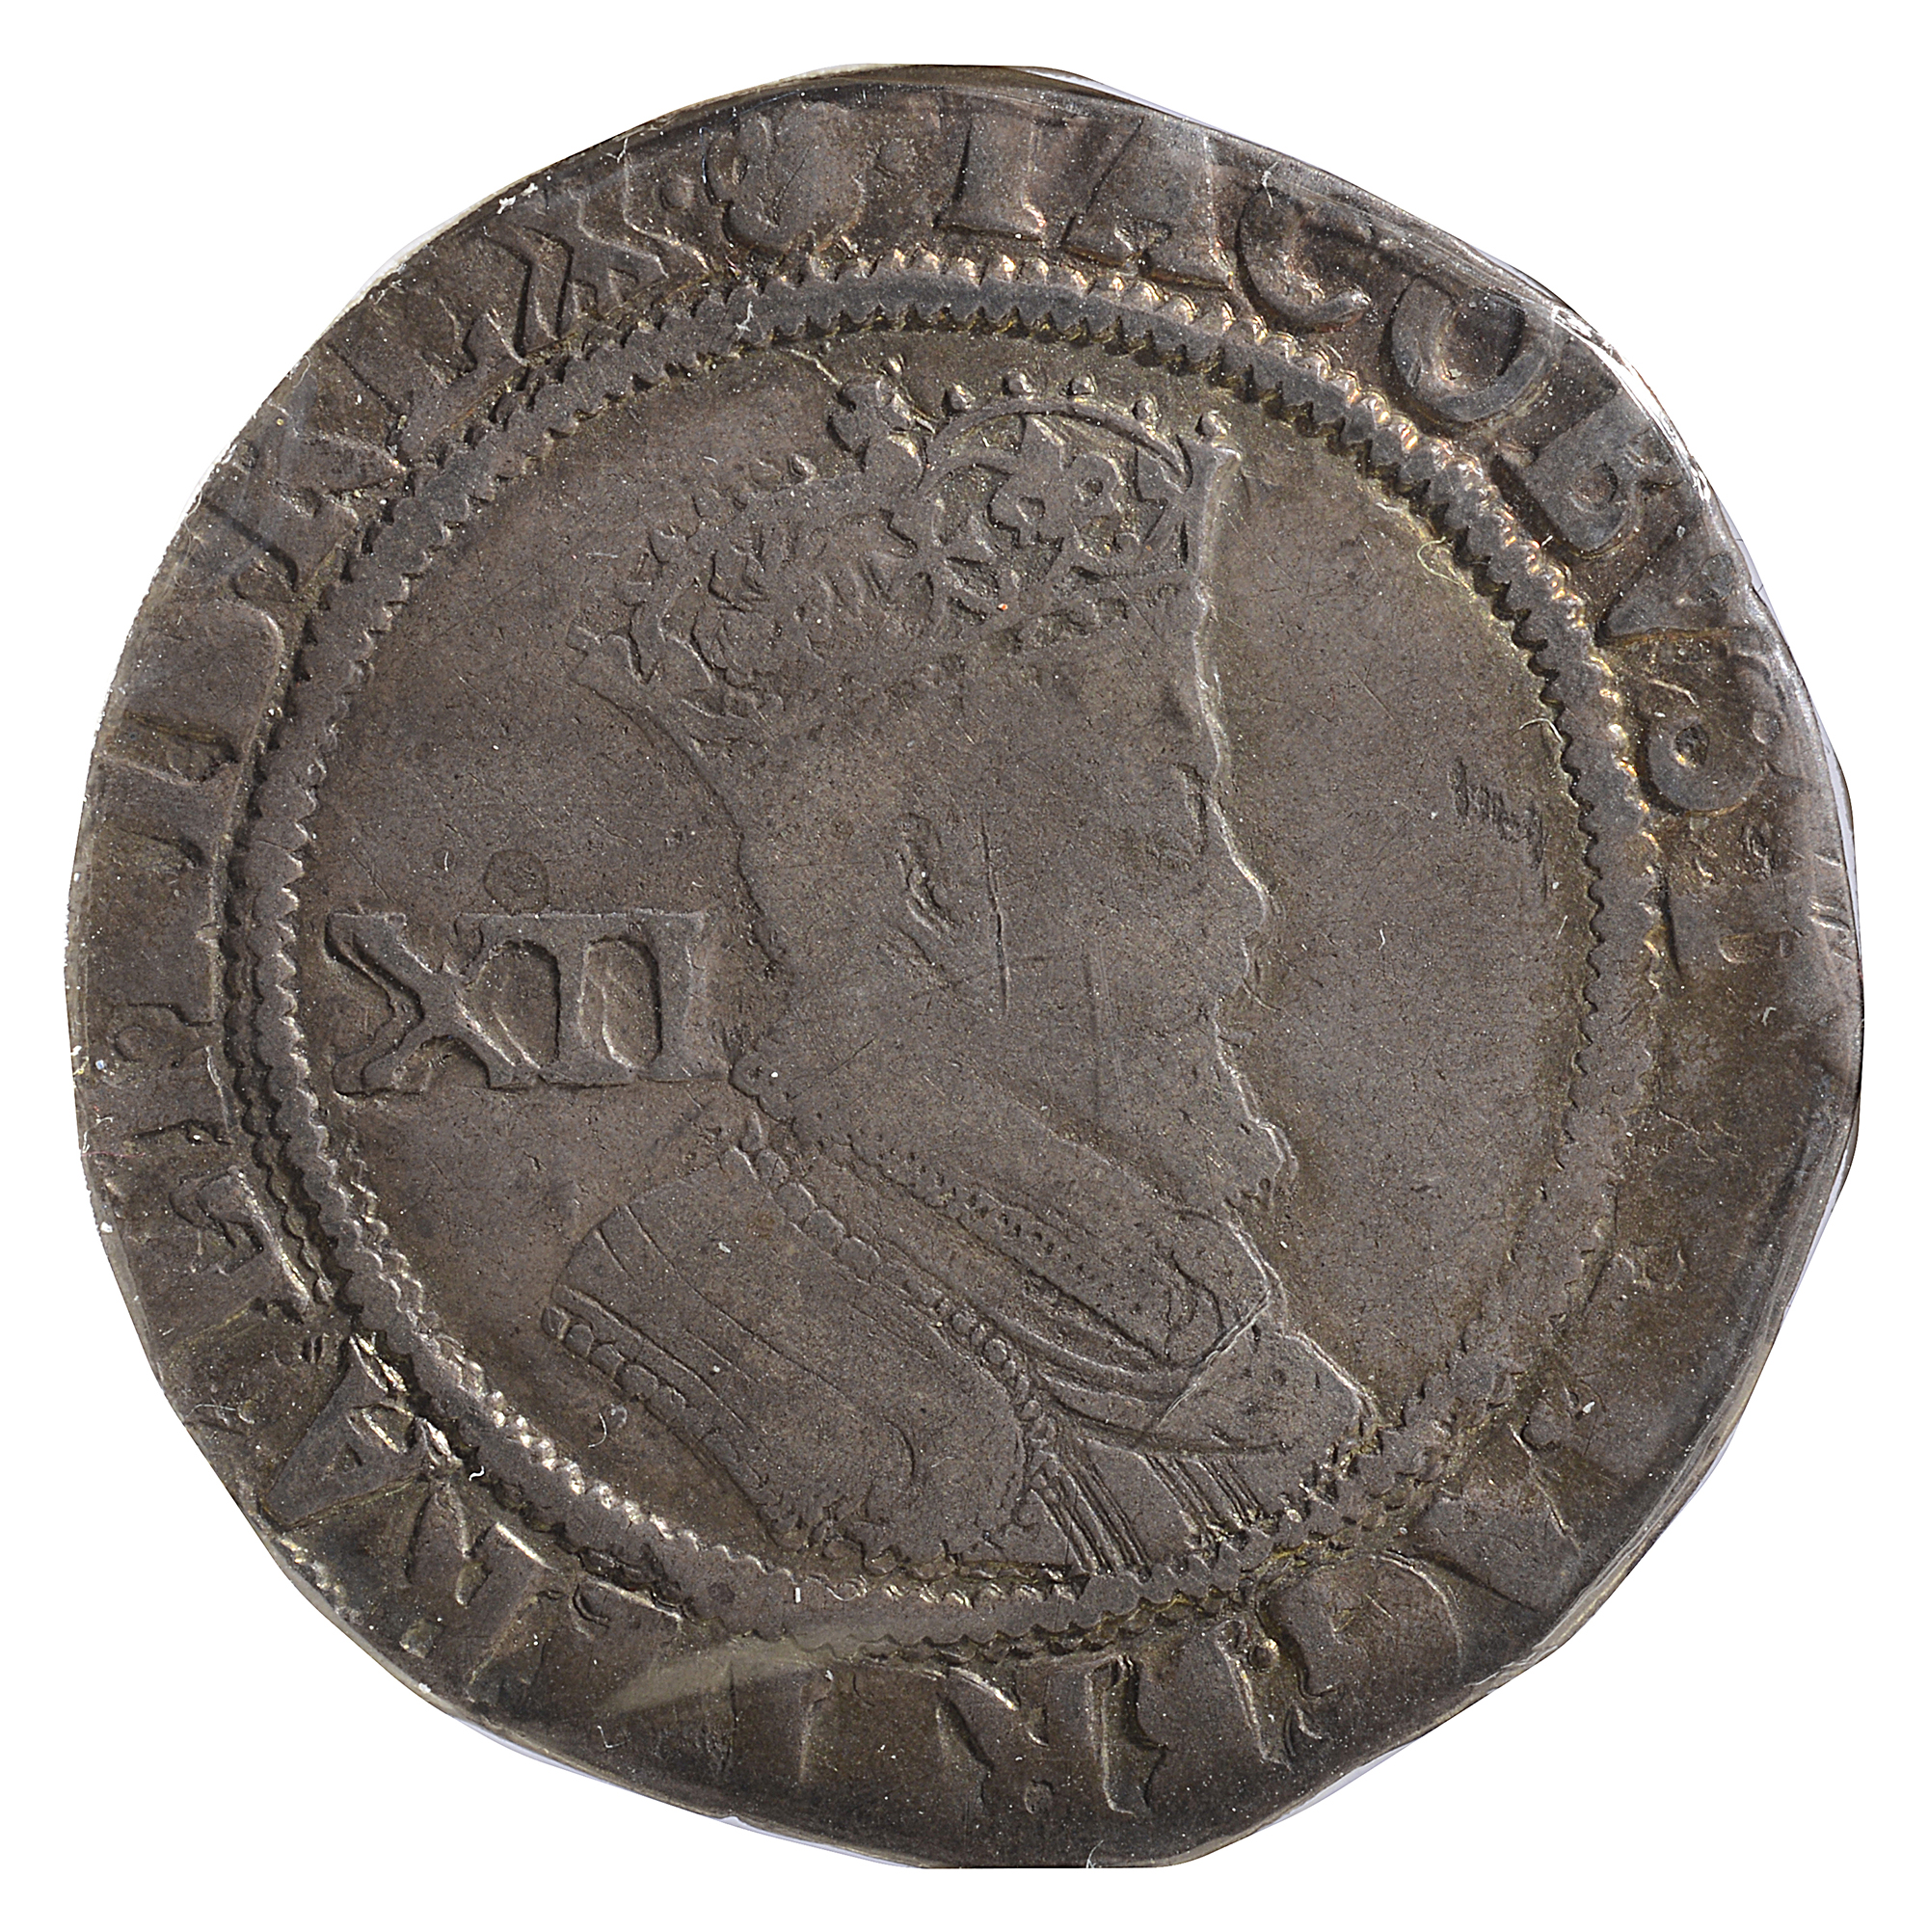 James I (1603-1625) silver shilling second coinage mint mark roseIACOBVS D G MAG BRIT FRA ET HIB REX